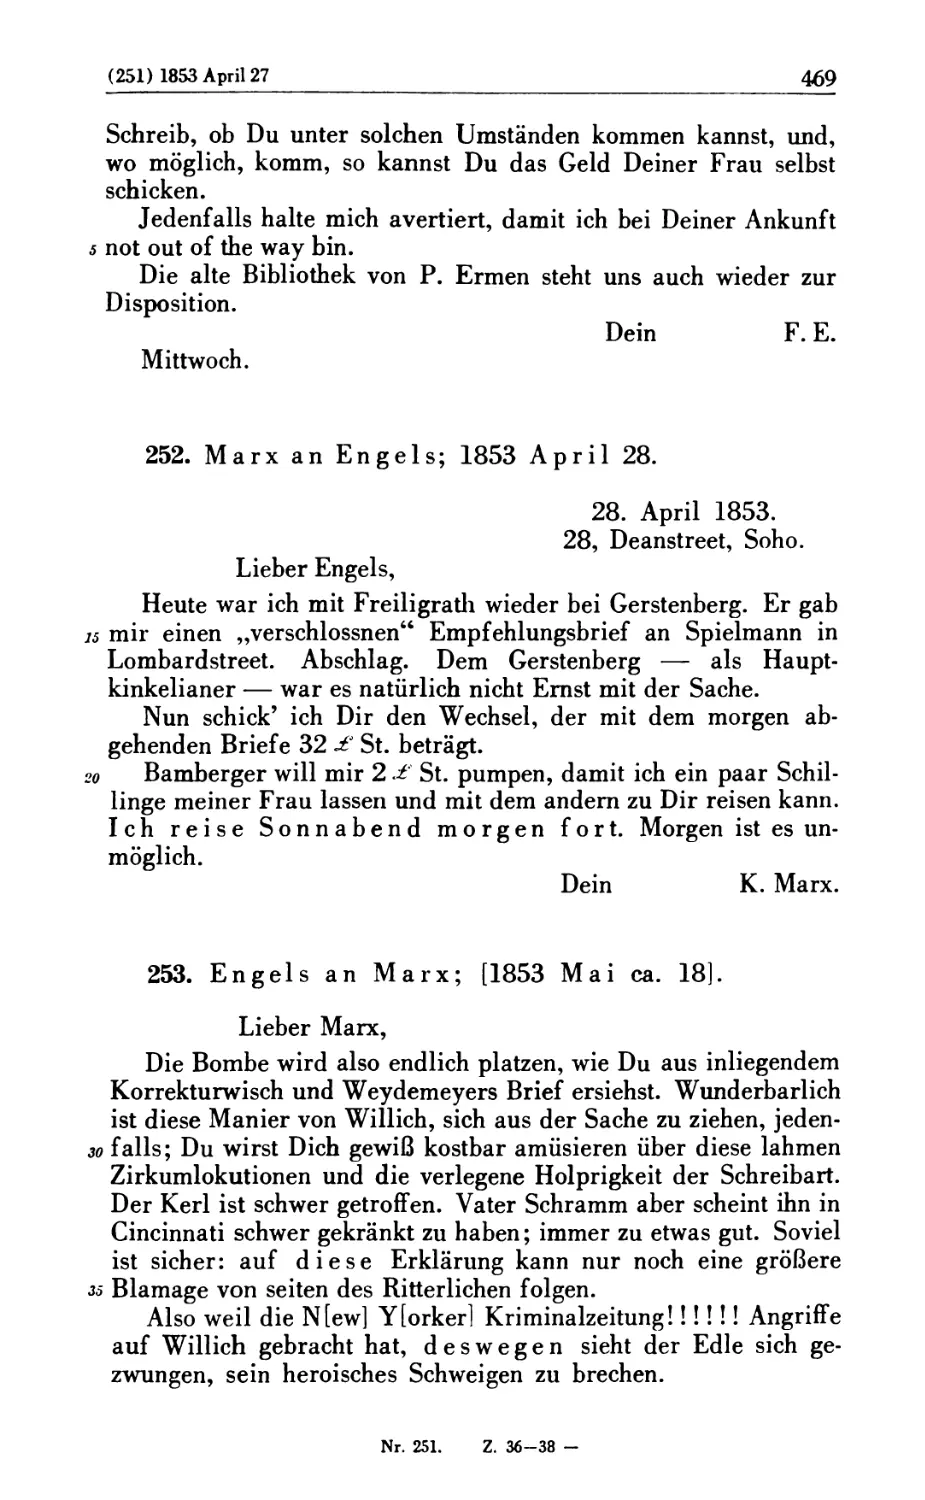 252. Marx an Engels; 1853 April 28
253. Engels an Marx; [1853 Mai ca. 18]